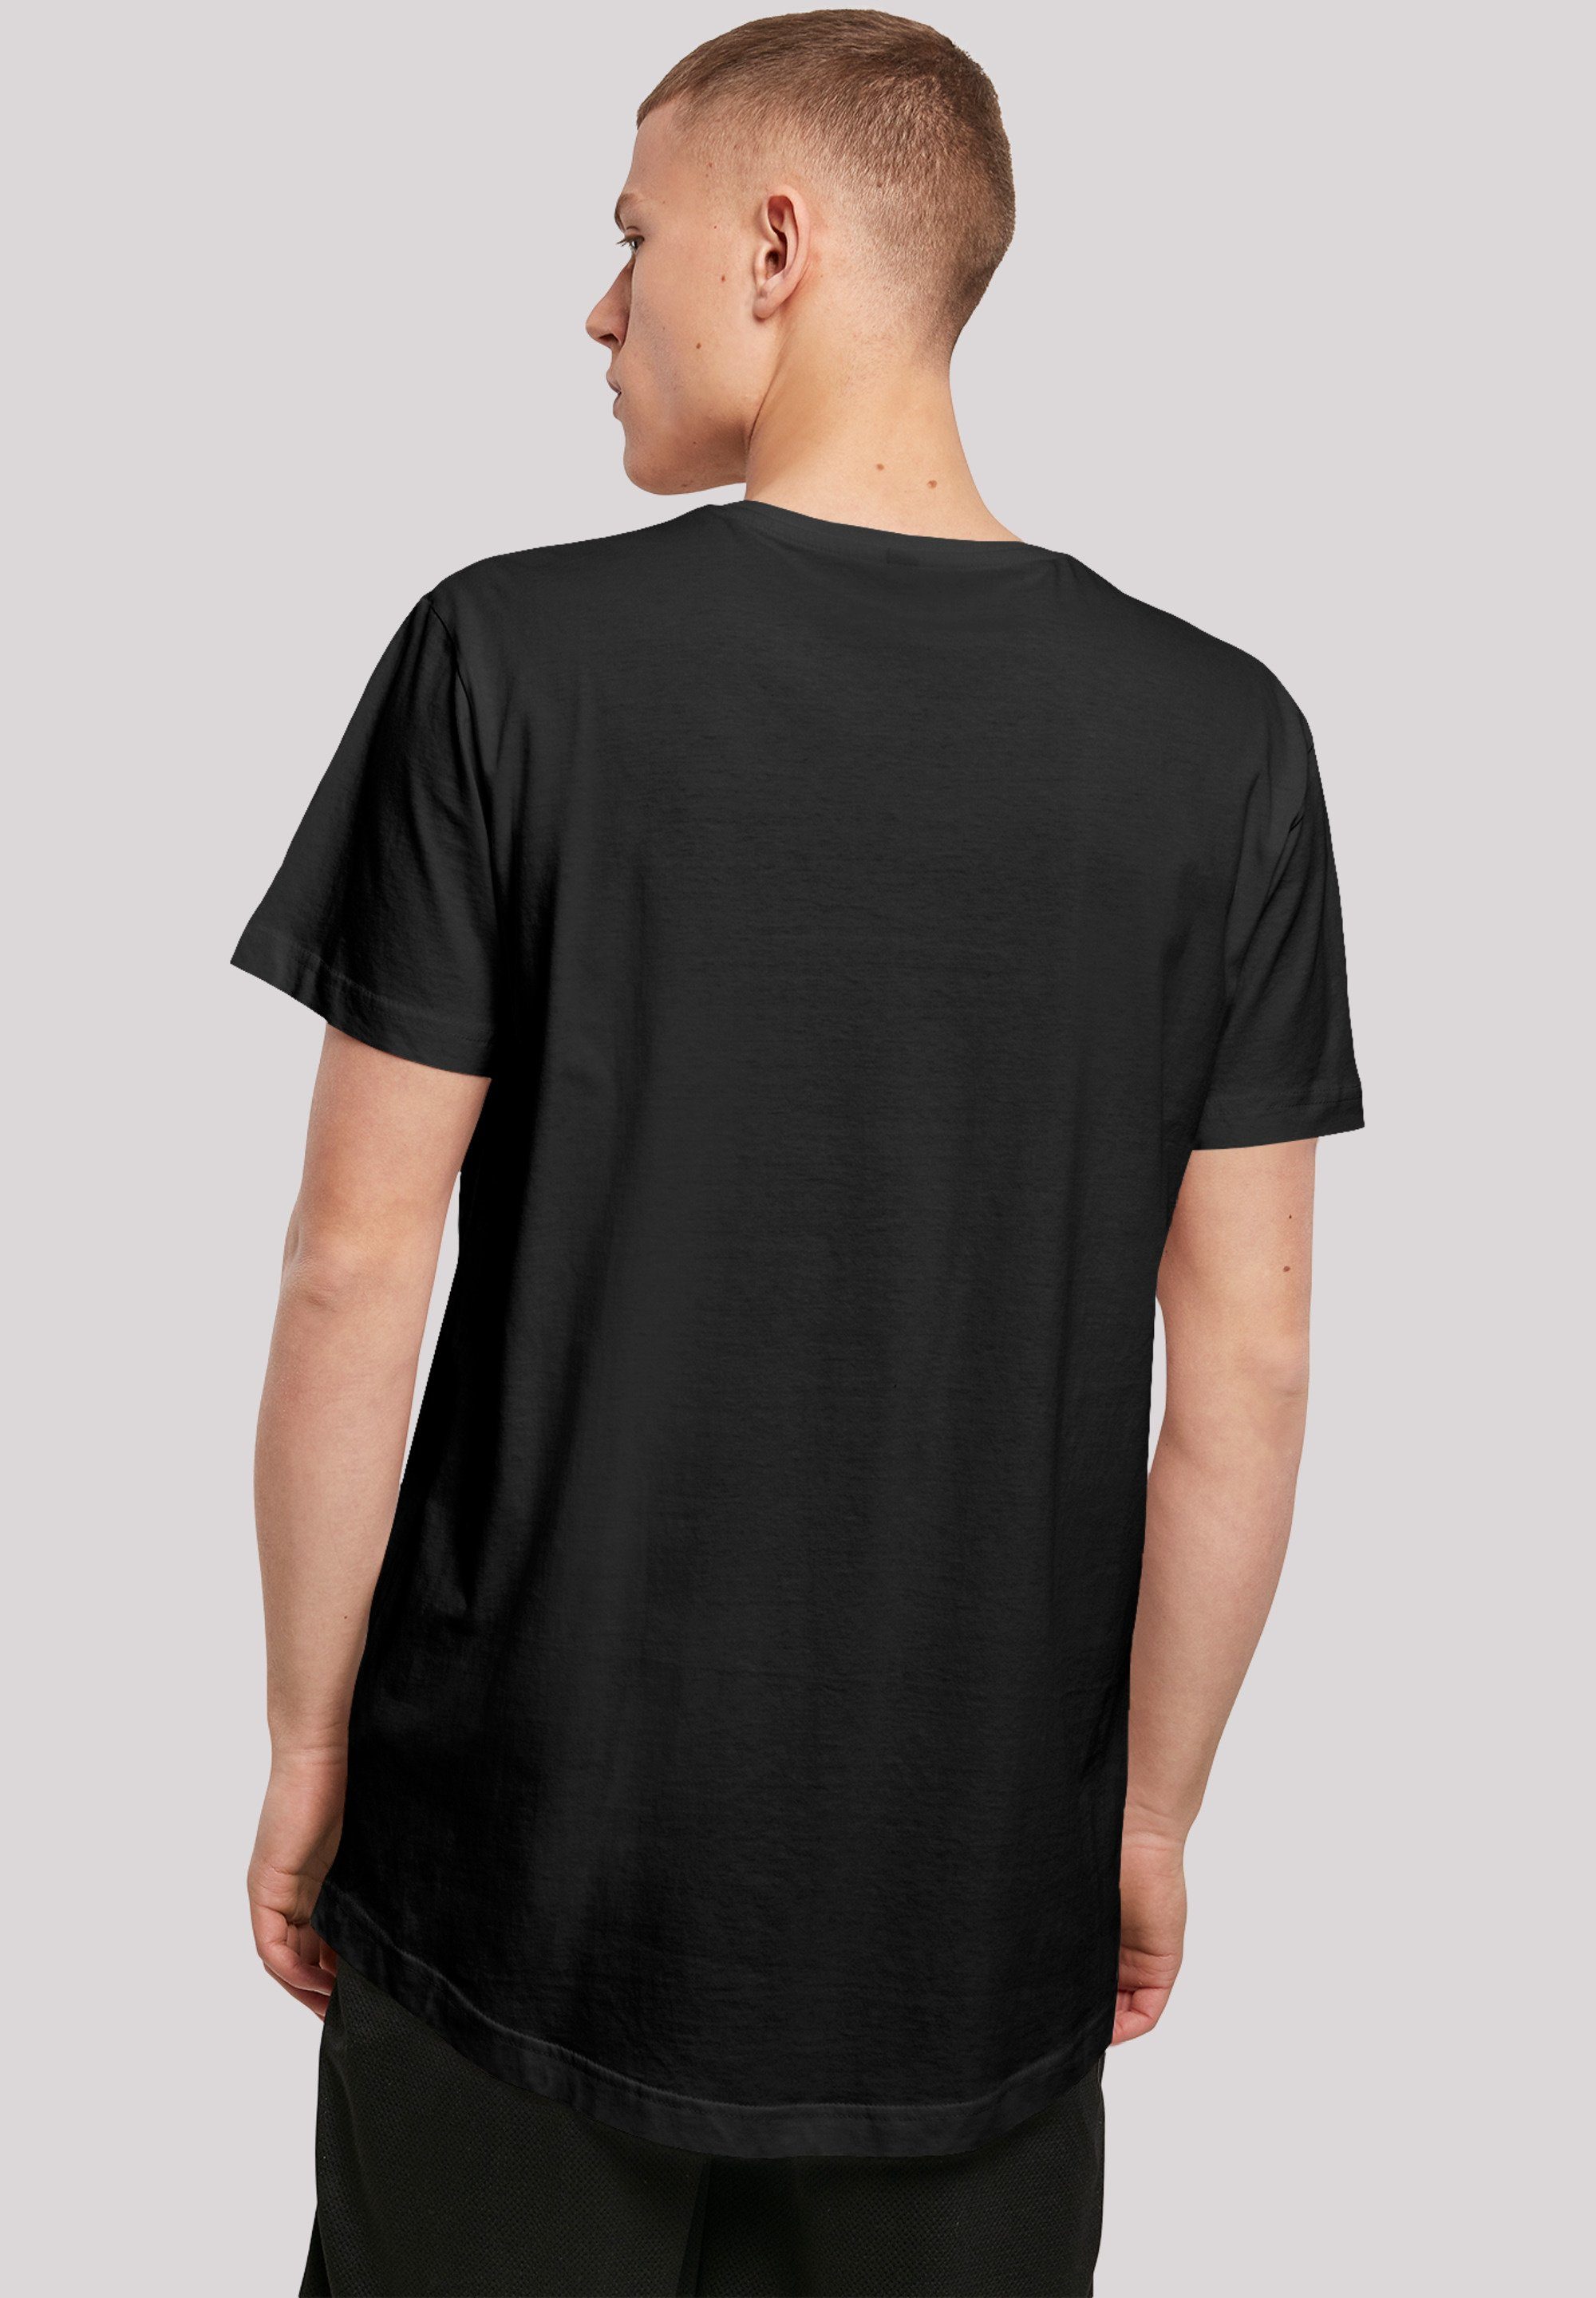 Long Mandalorian F4NT4STIC T-Shirt Is The Print Way' Shirt Wars T This Cut 'Star